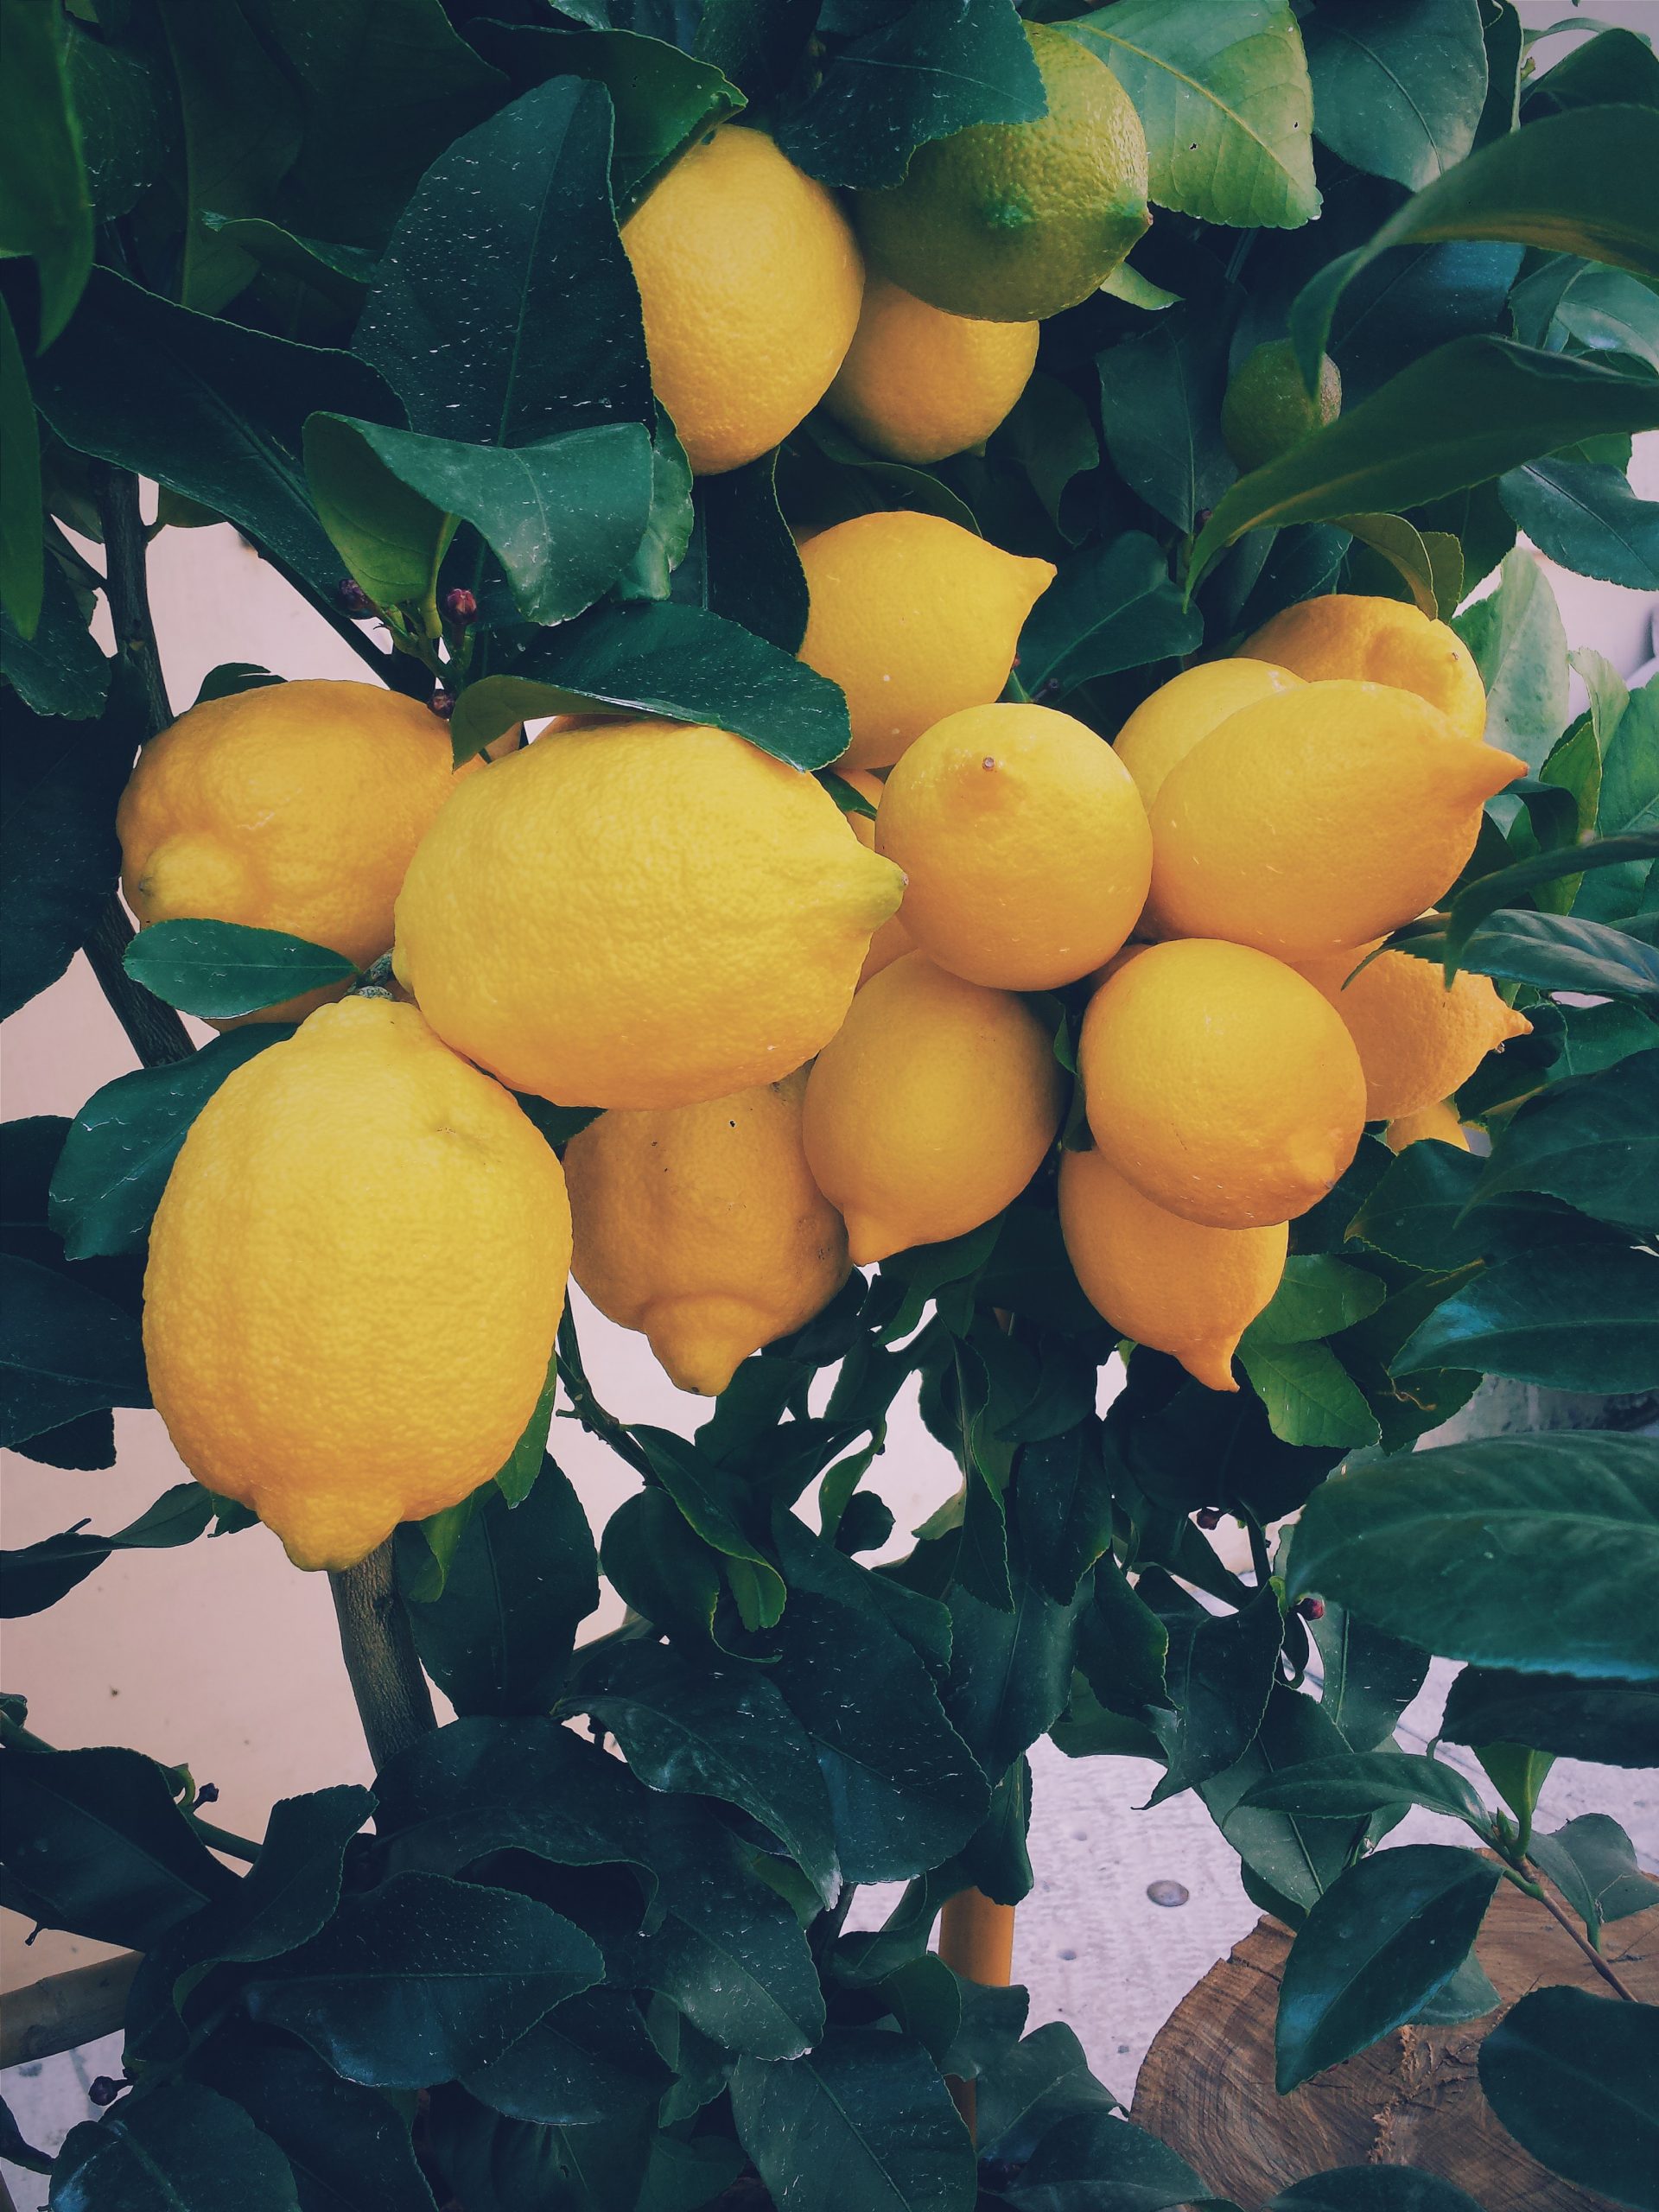 Can You Espalier A Lemon Tree?